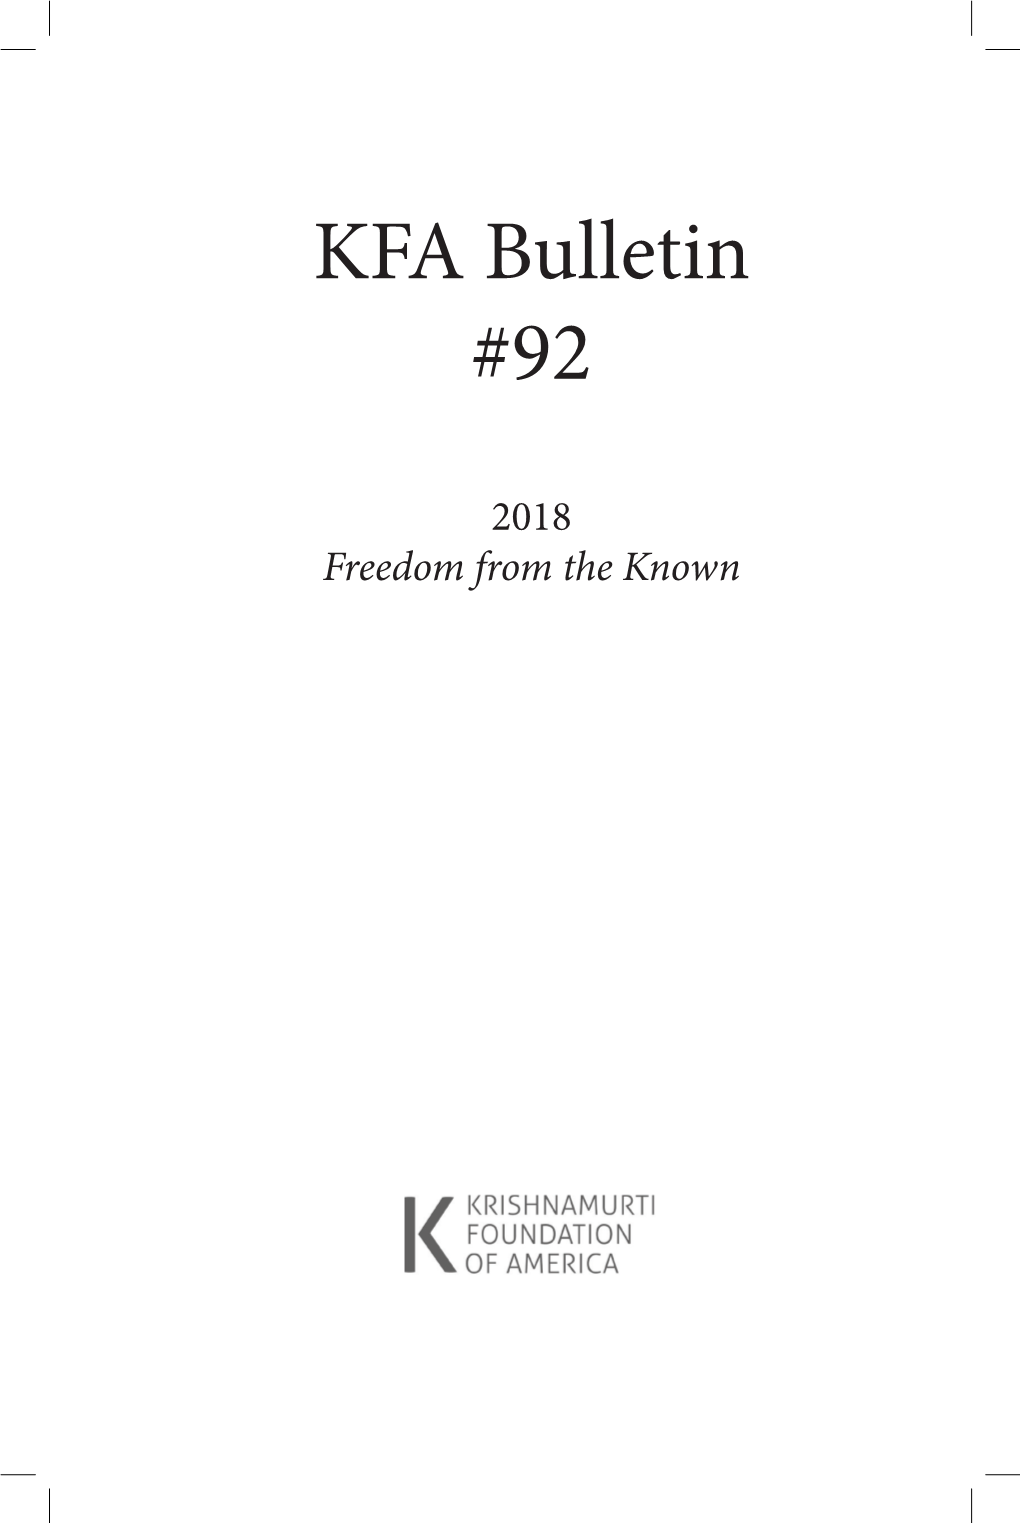 KFA Bulletin #92